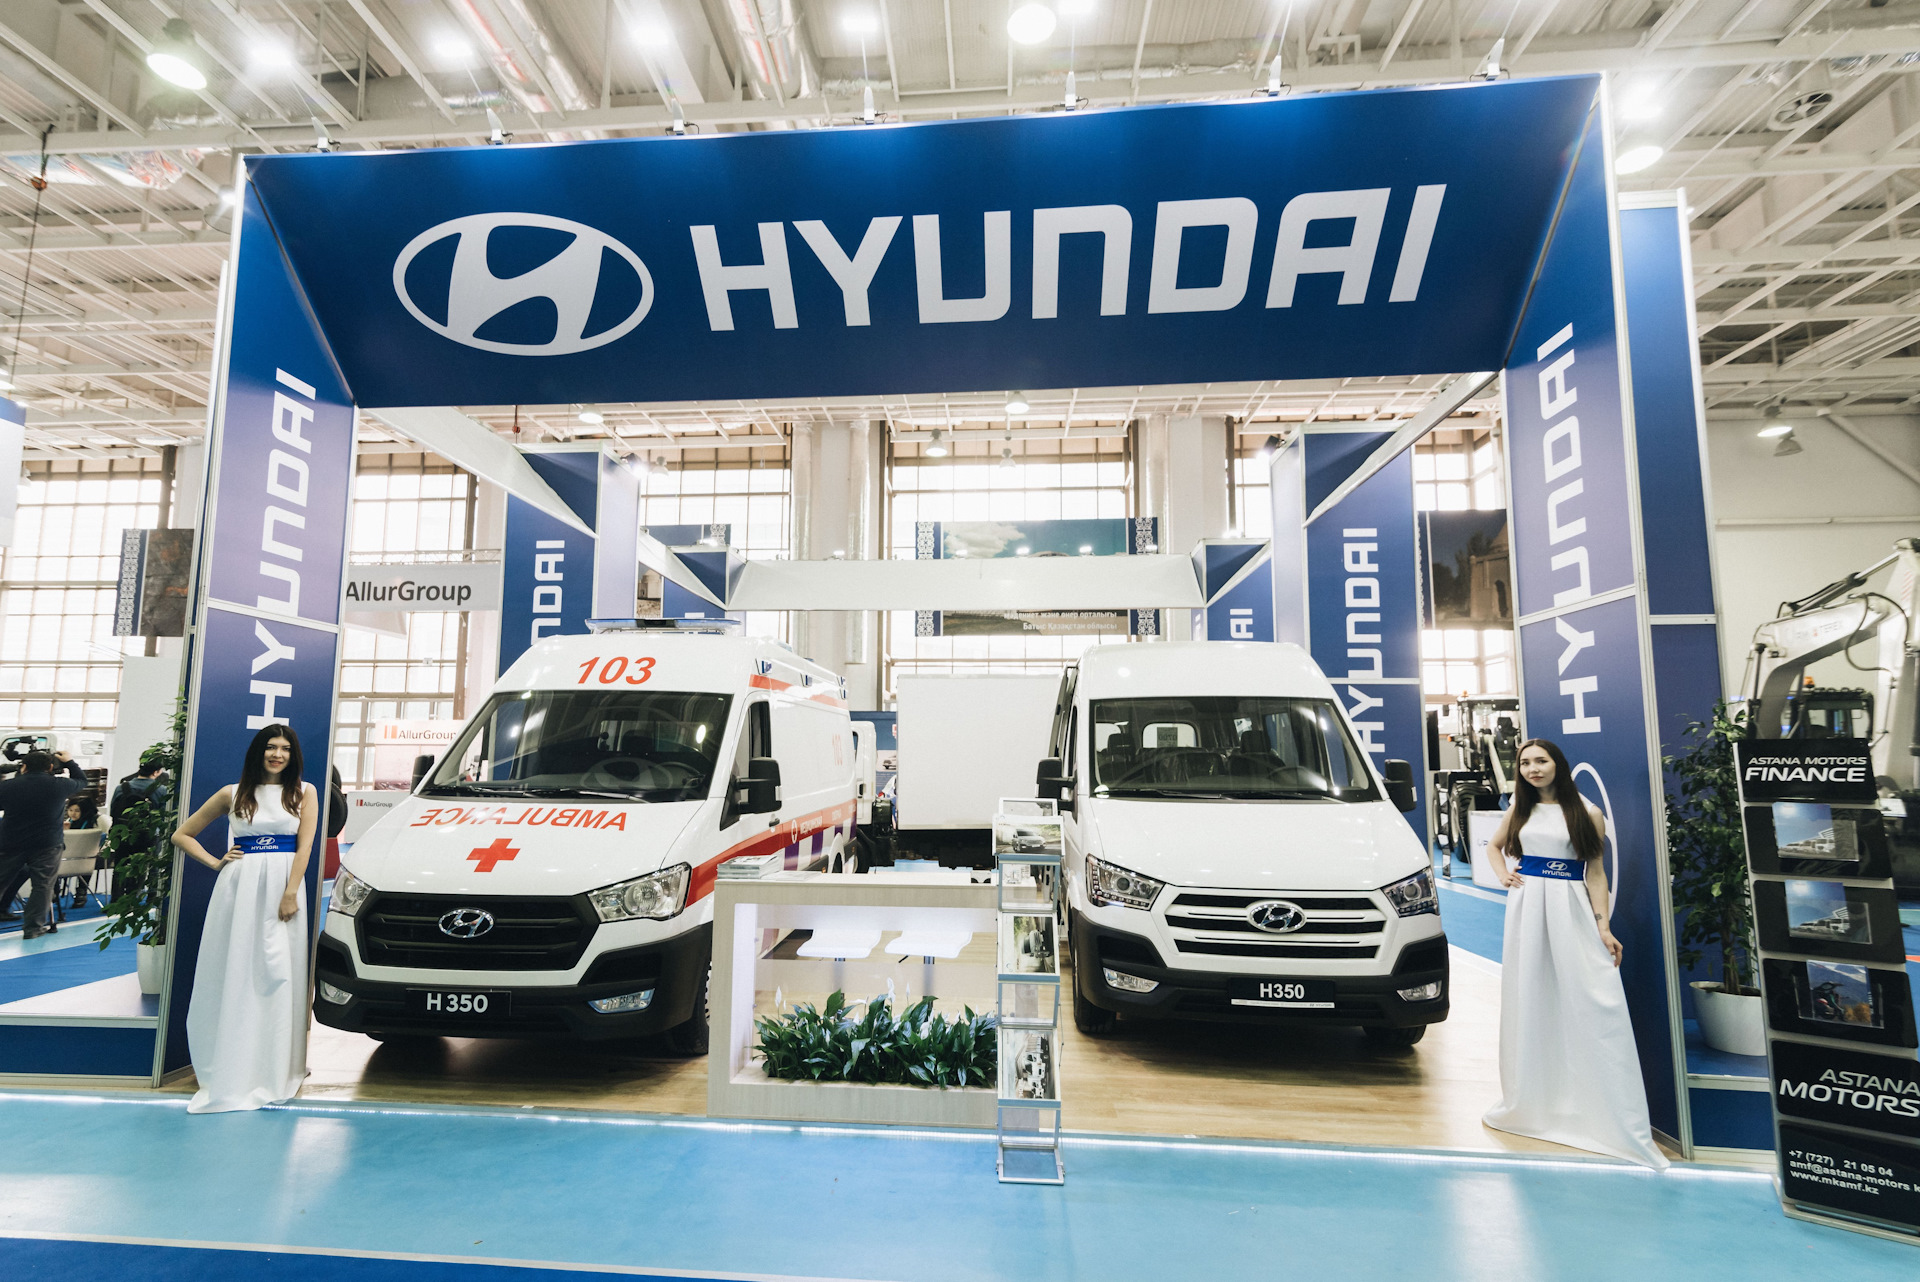 Сайт хендай казахстан. Hyundai Trans. Hyundai Казахстан. КОМТРАНС 2021. Hyundai Trans Kazakhstan логотип.